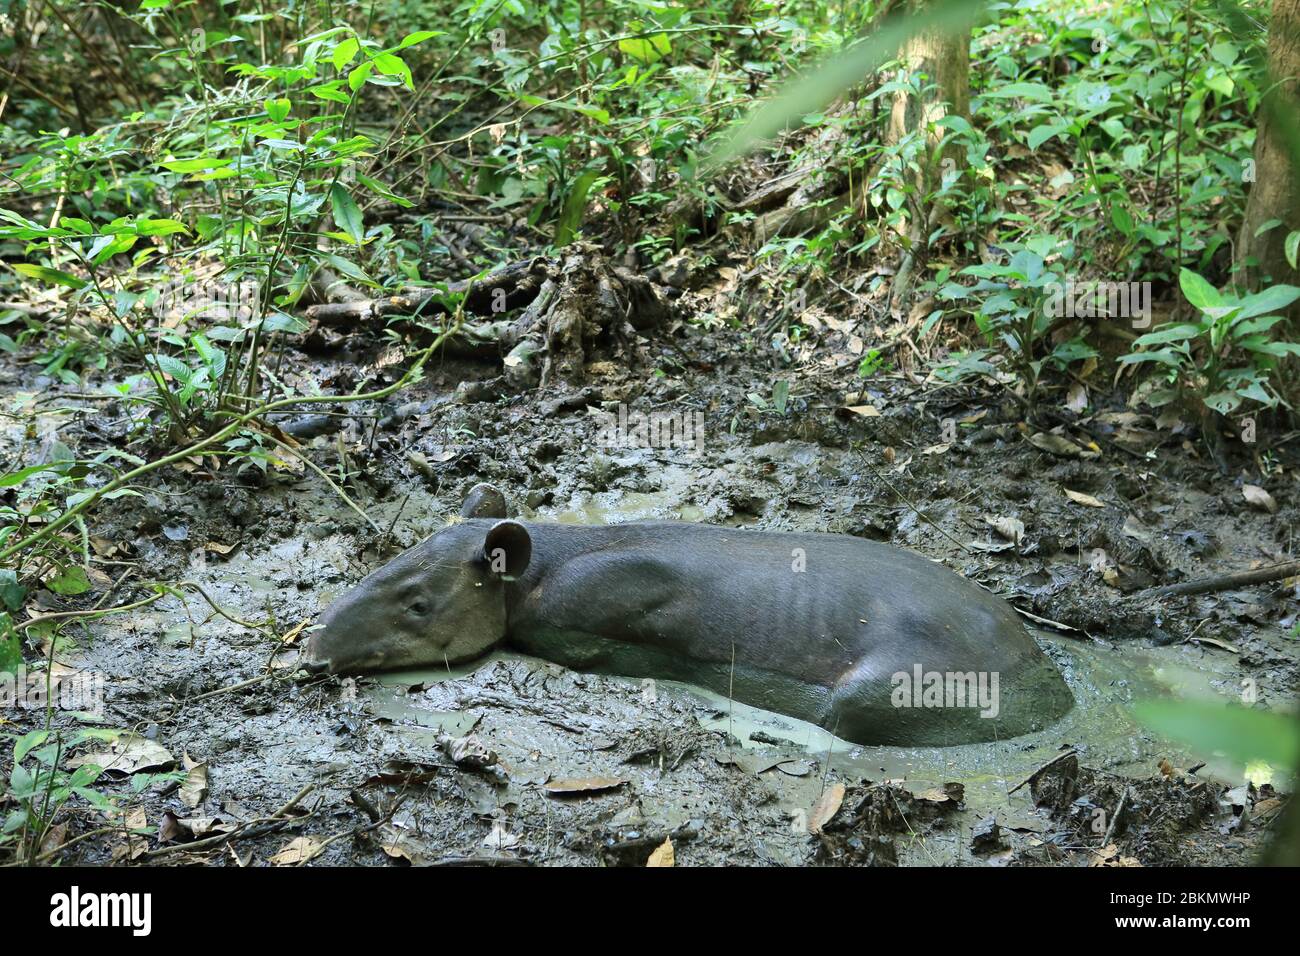 Tapir de Baird (Tapirus bairdii) descansando en el barro de un arroyo de selva semi-seca. Estación de Guardaparques Sirena, Parque Nacional Corcovado, Osa, Costa Rica Foto de stock